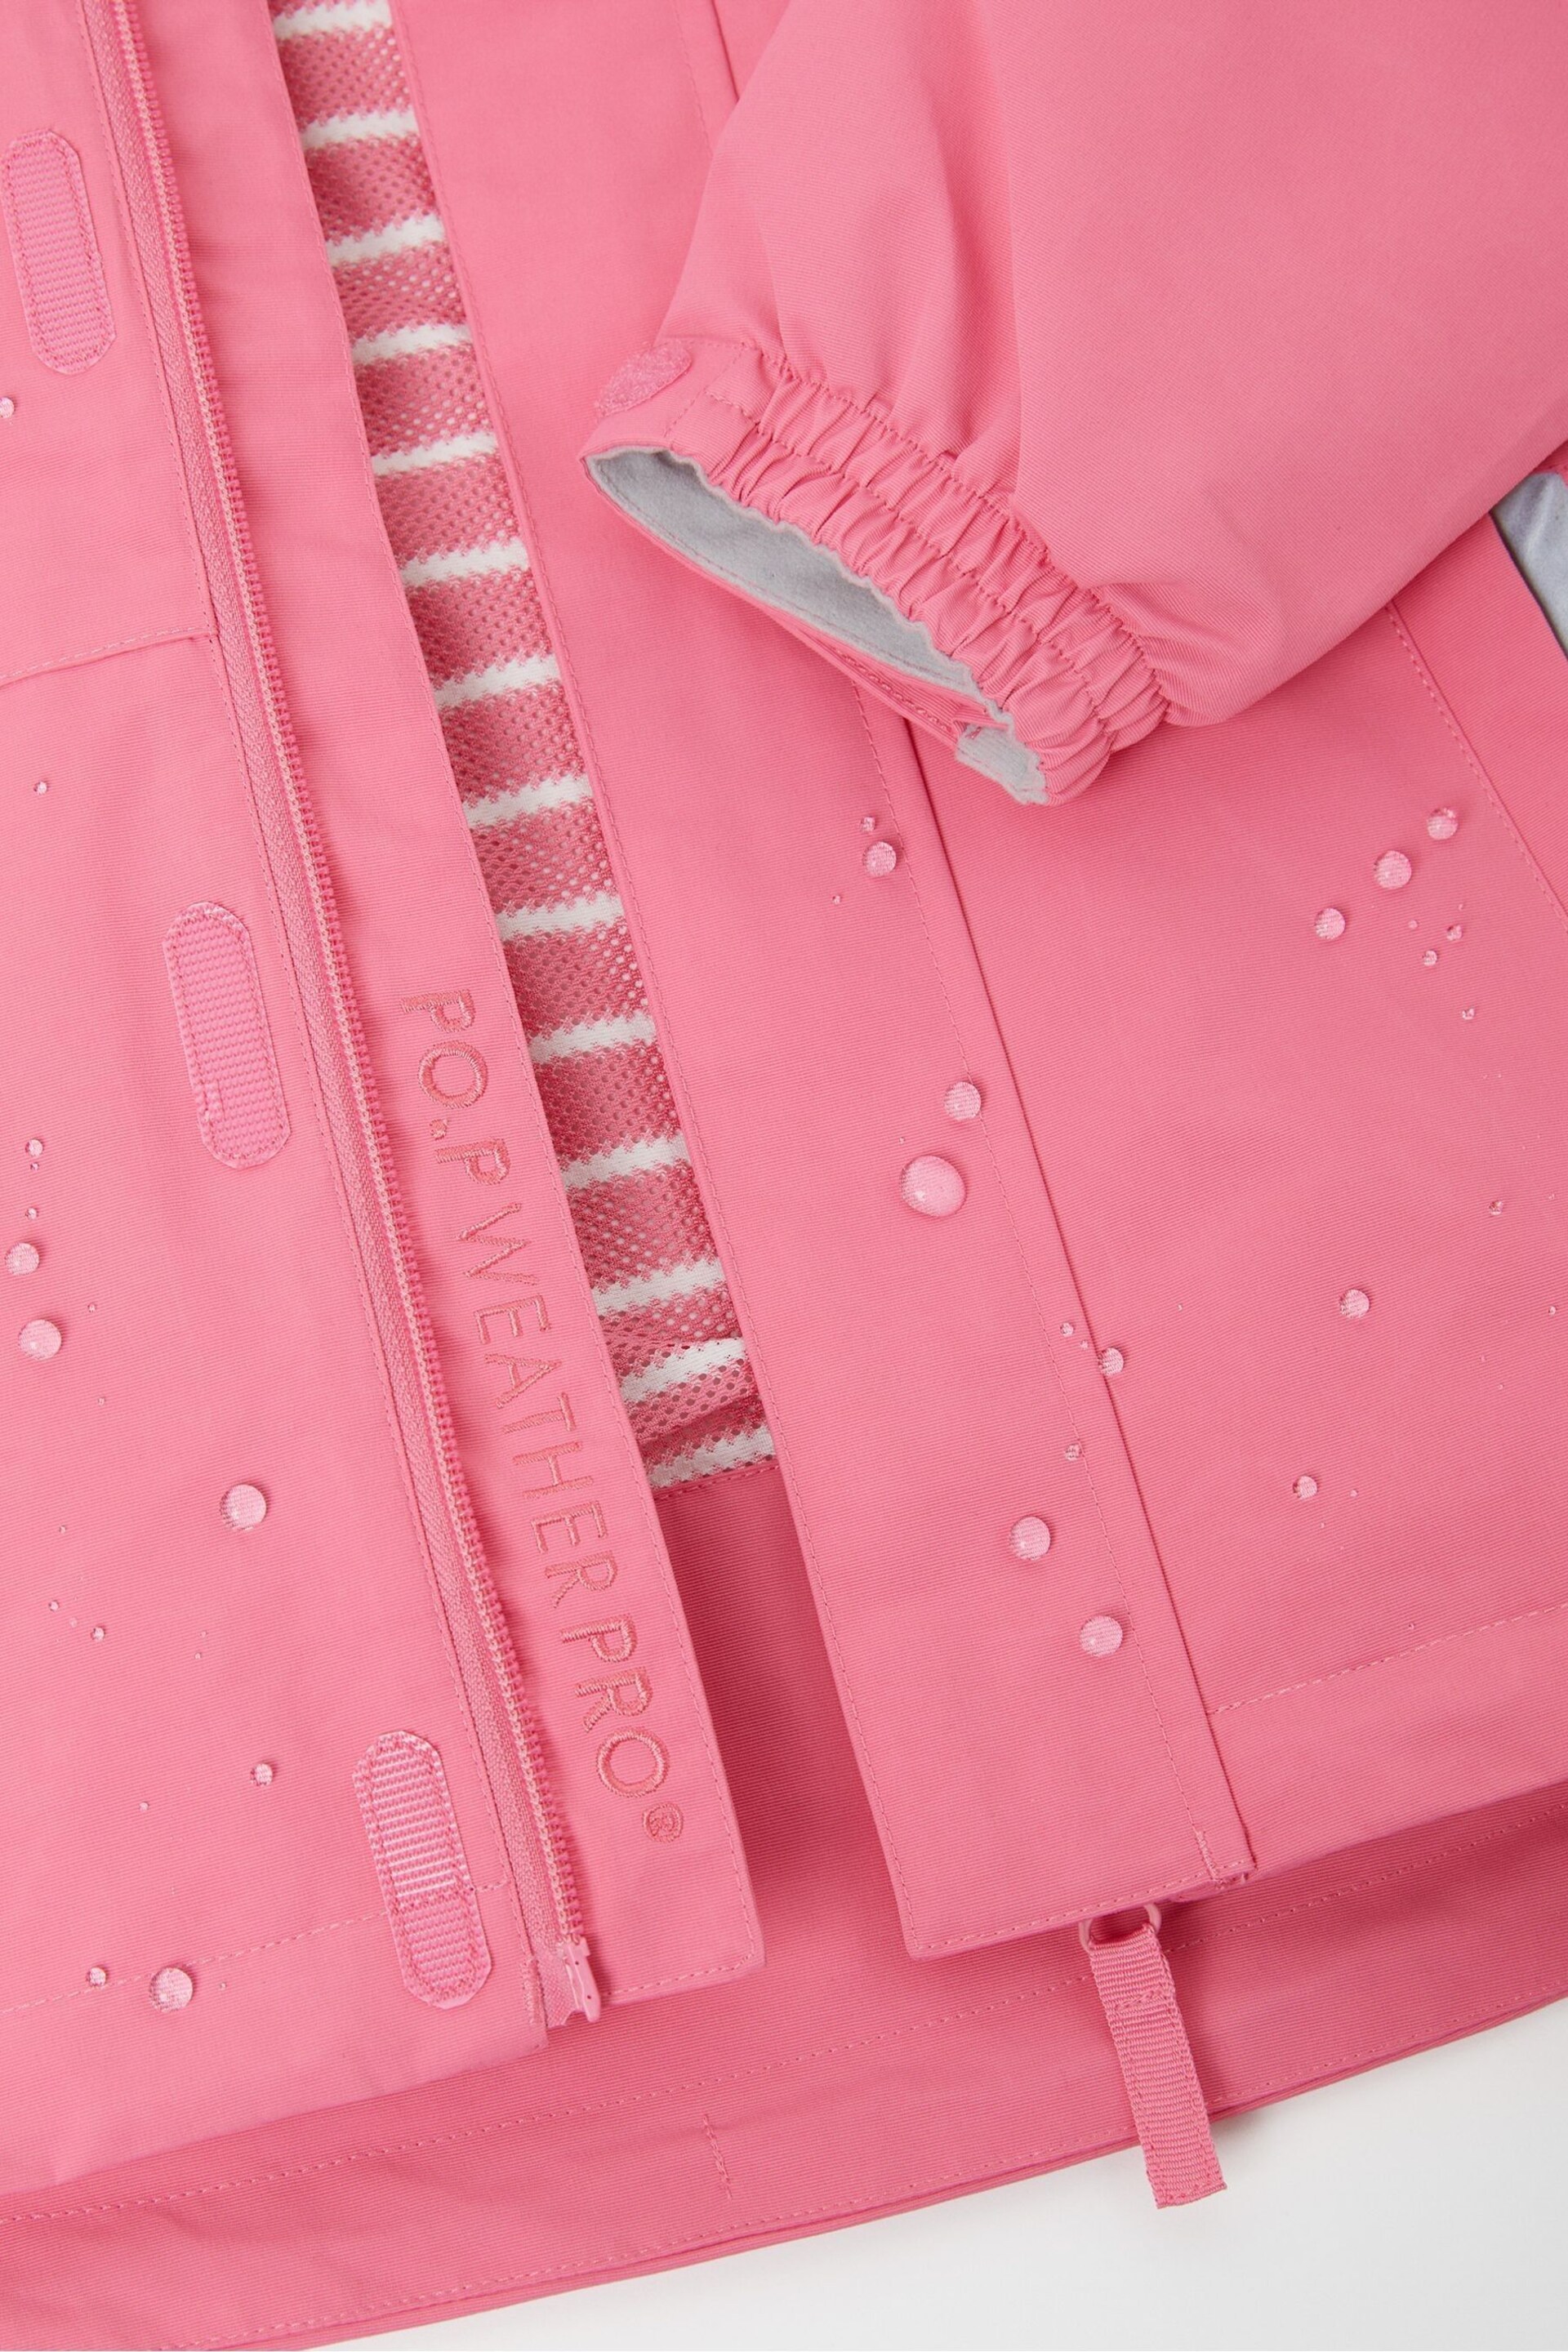 Polarn O. Pyret Pink Waterproof Shell Jacket - Image 4 of 6